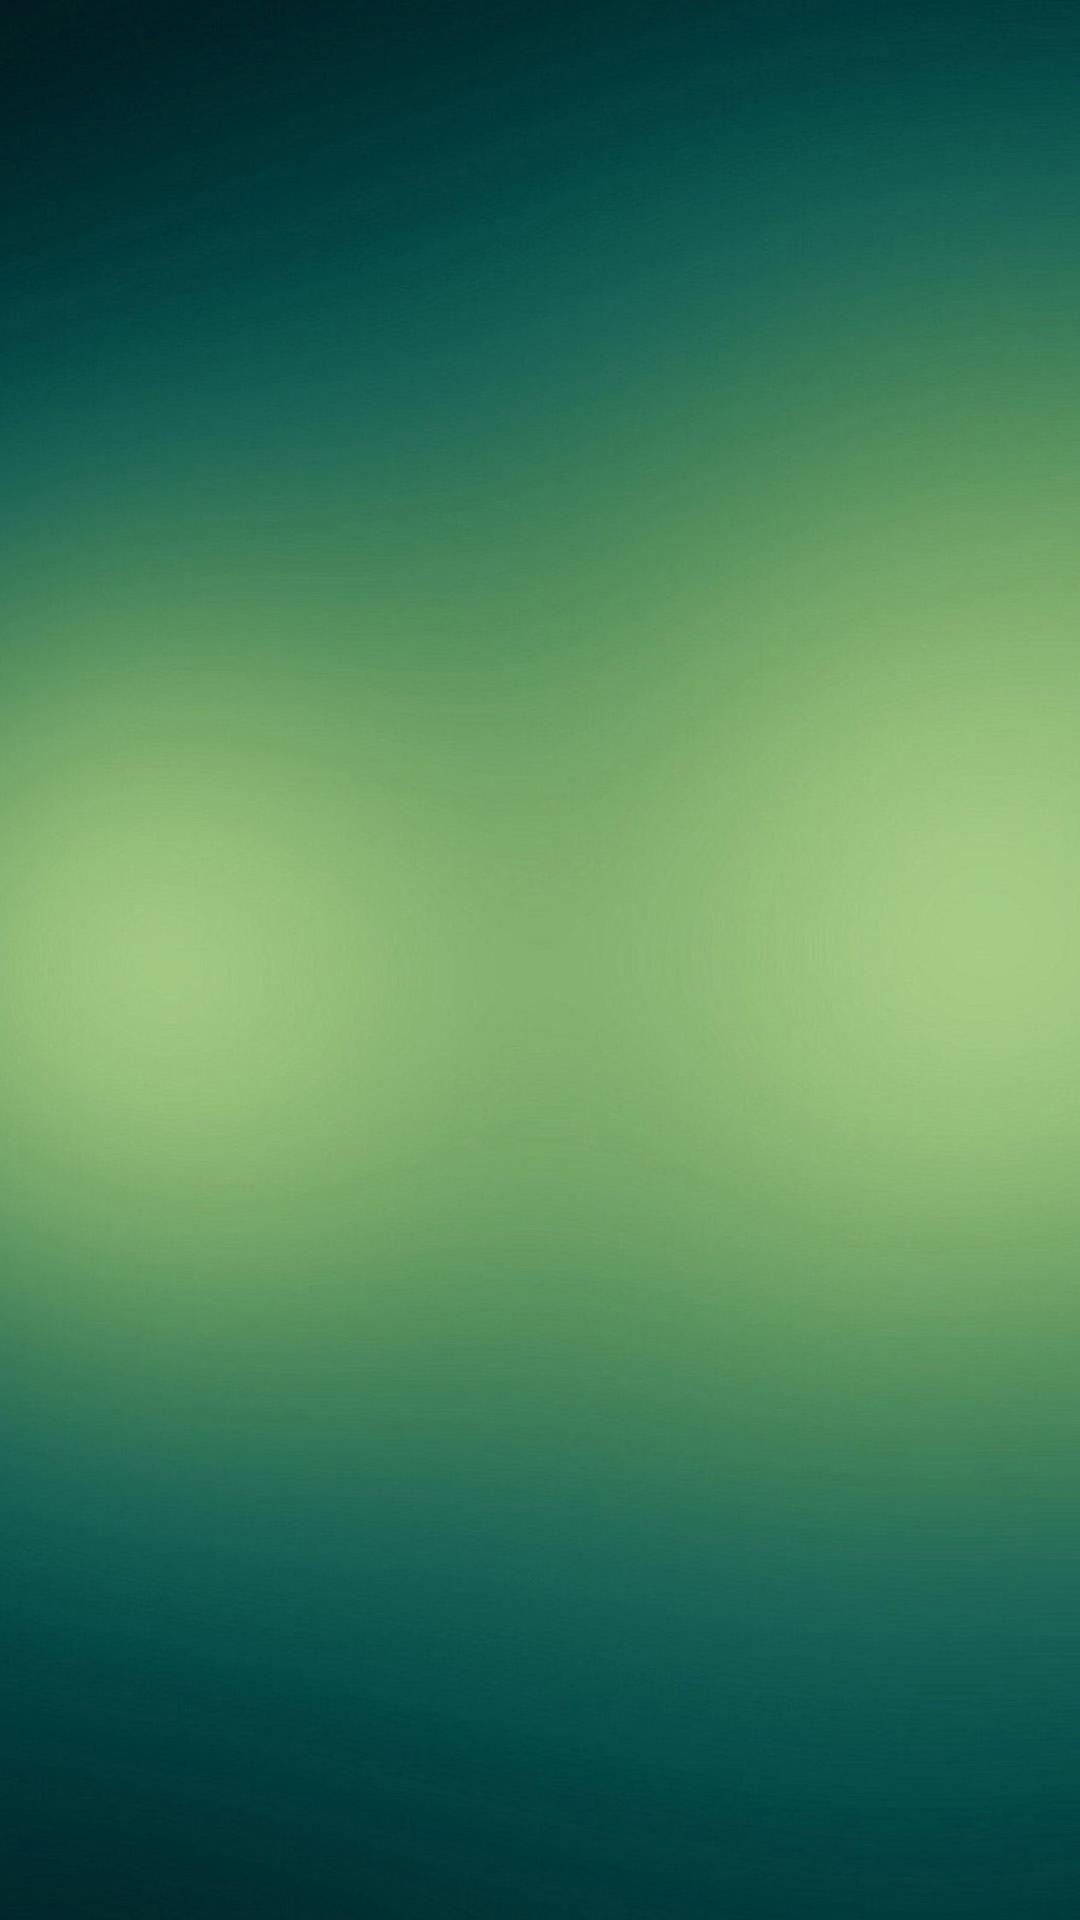 Green Haze Blur Gradient Android Wallpaper free download